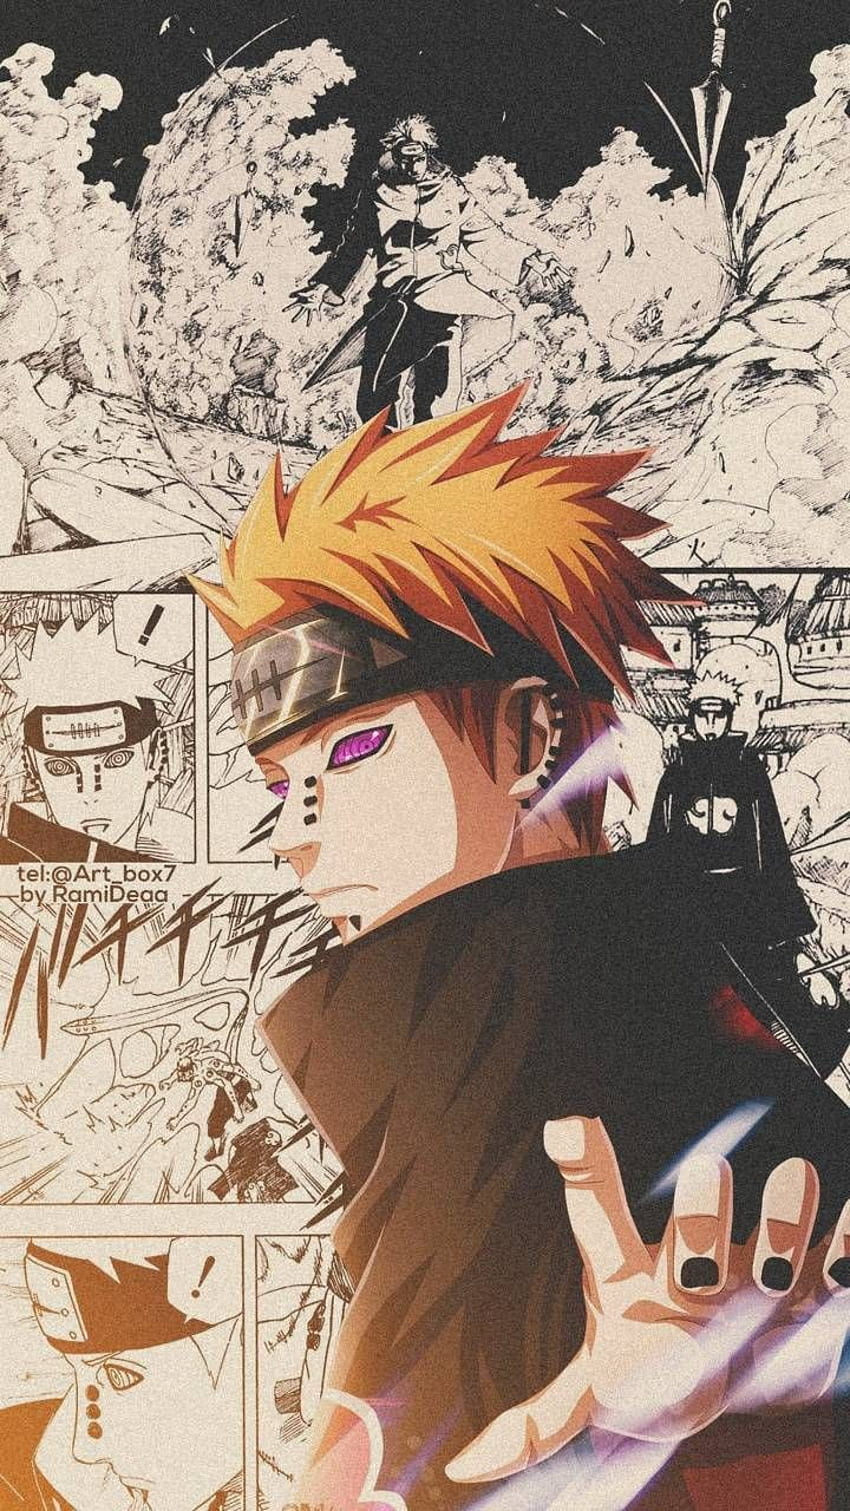 Naruto 4k Wallpaper - NawPic